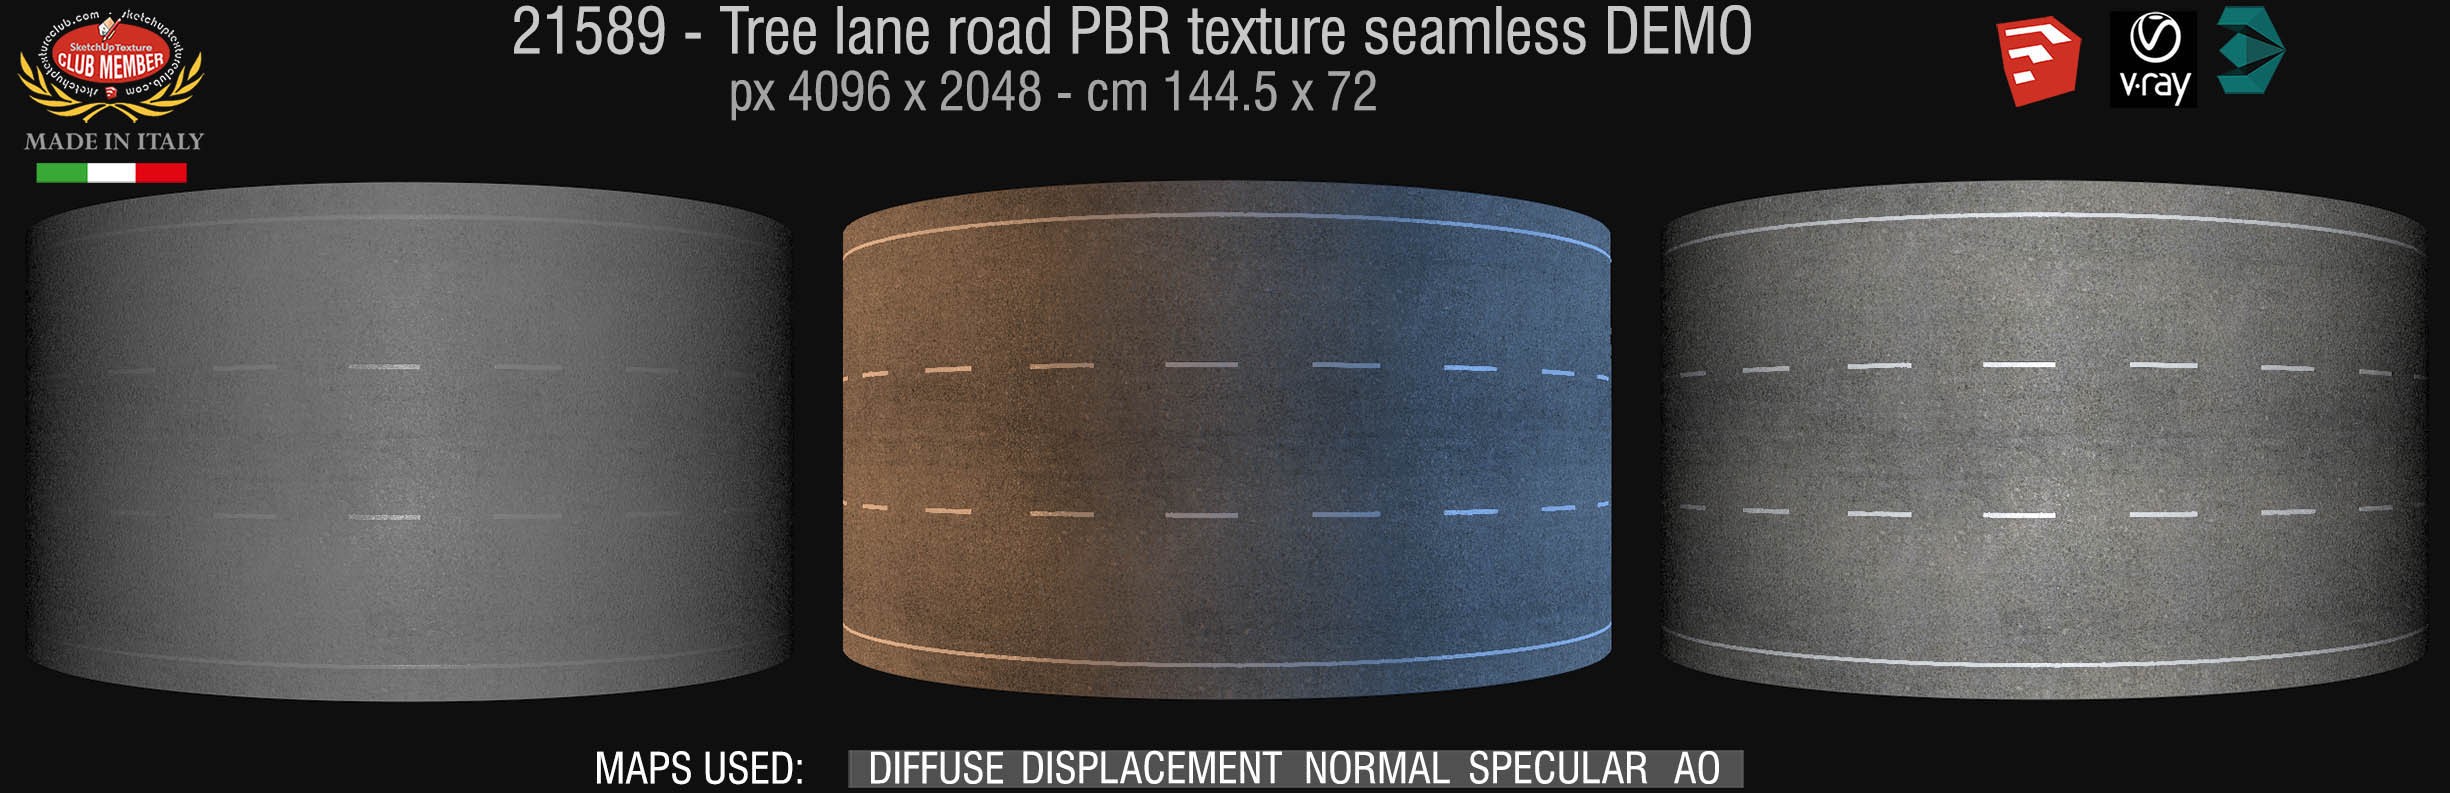 21590 Tree lane road clean PBR texture seamless DEMO